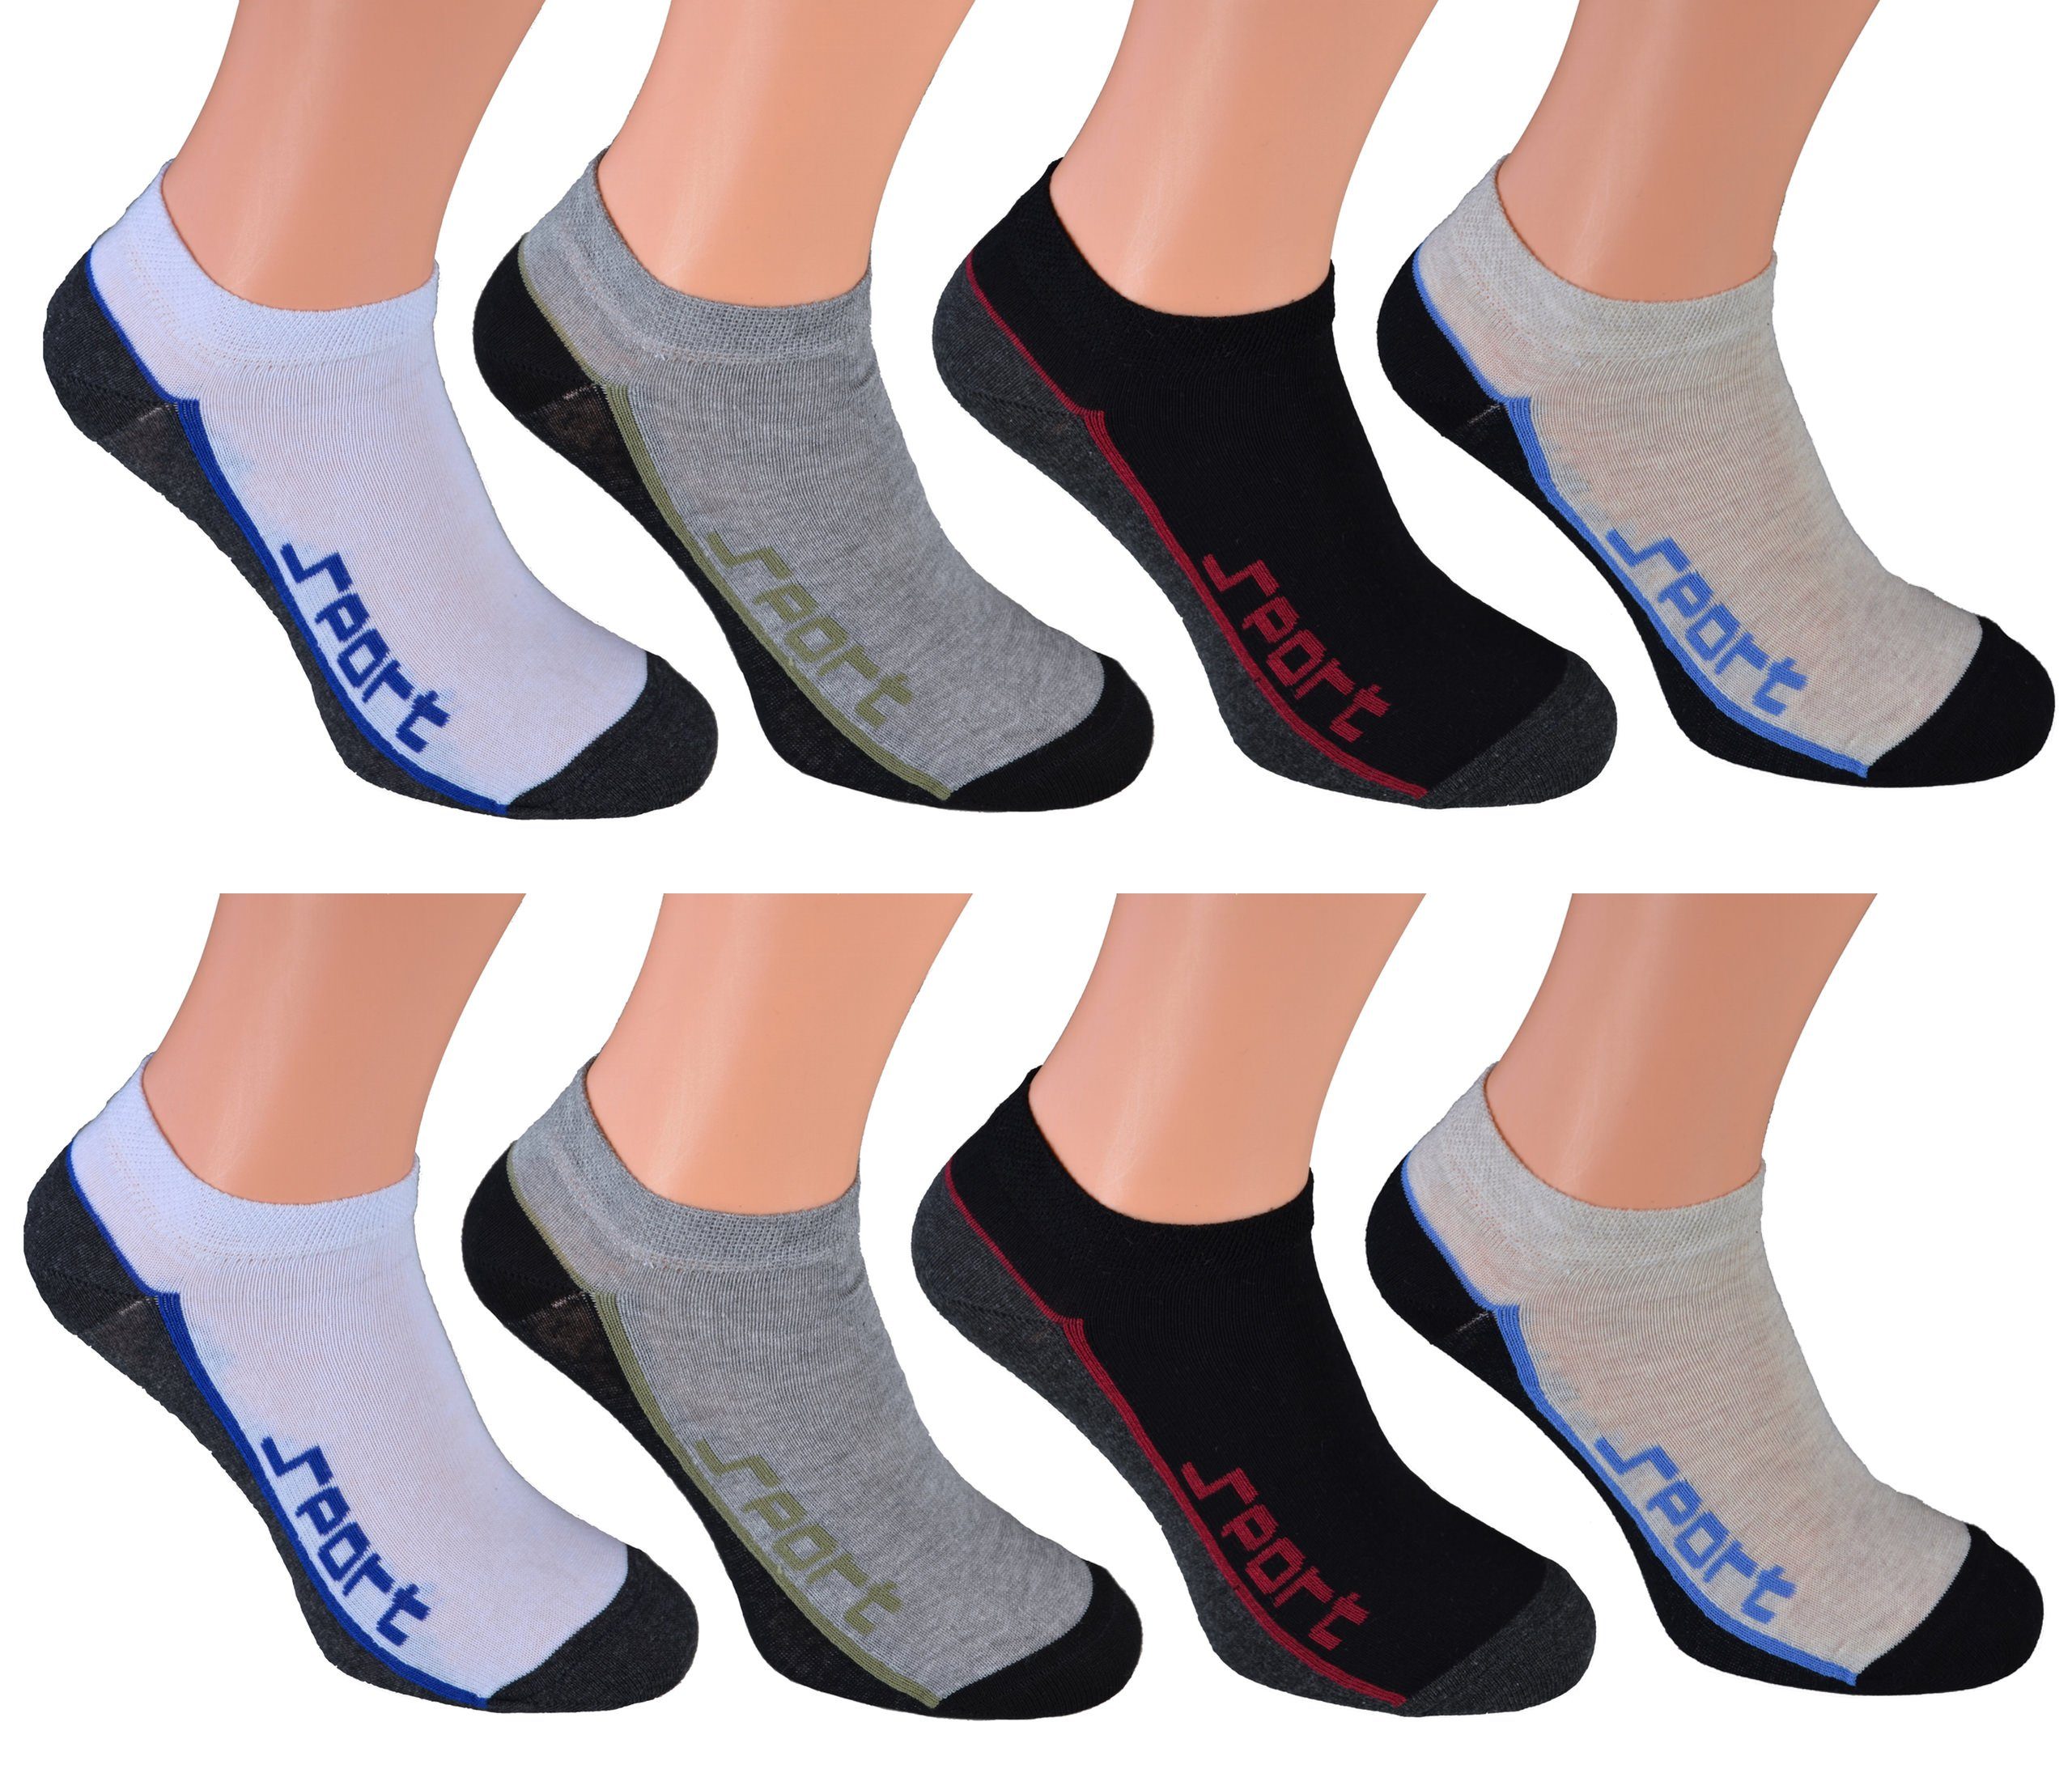 Cocain underwear Sneakersocken Söckchen für Baumwolle verschiedene (8-Paar) Sport Füsslinge Sneaker - Herren Modelle Paar 8 Socken